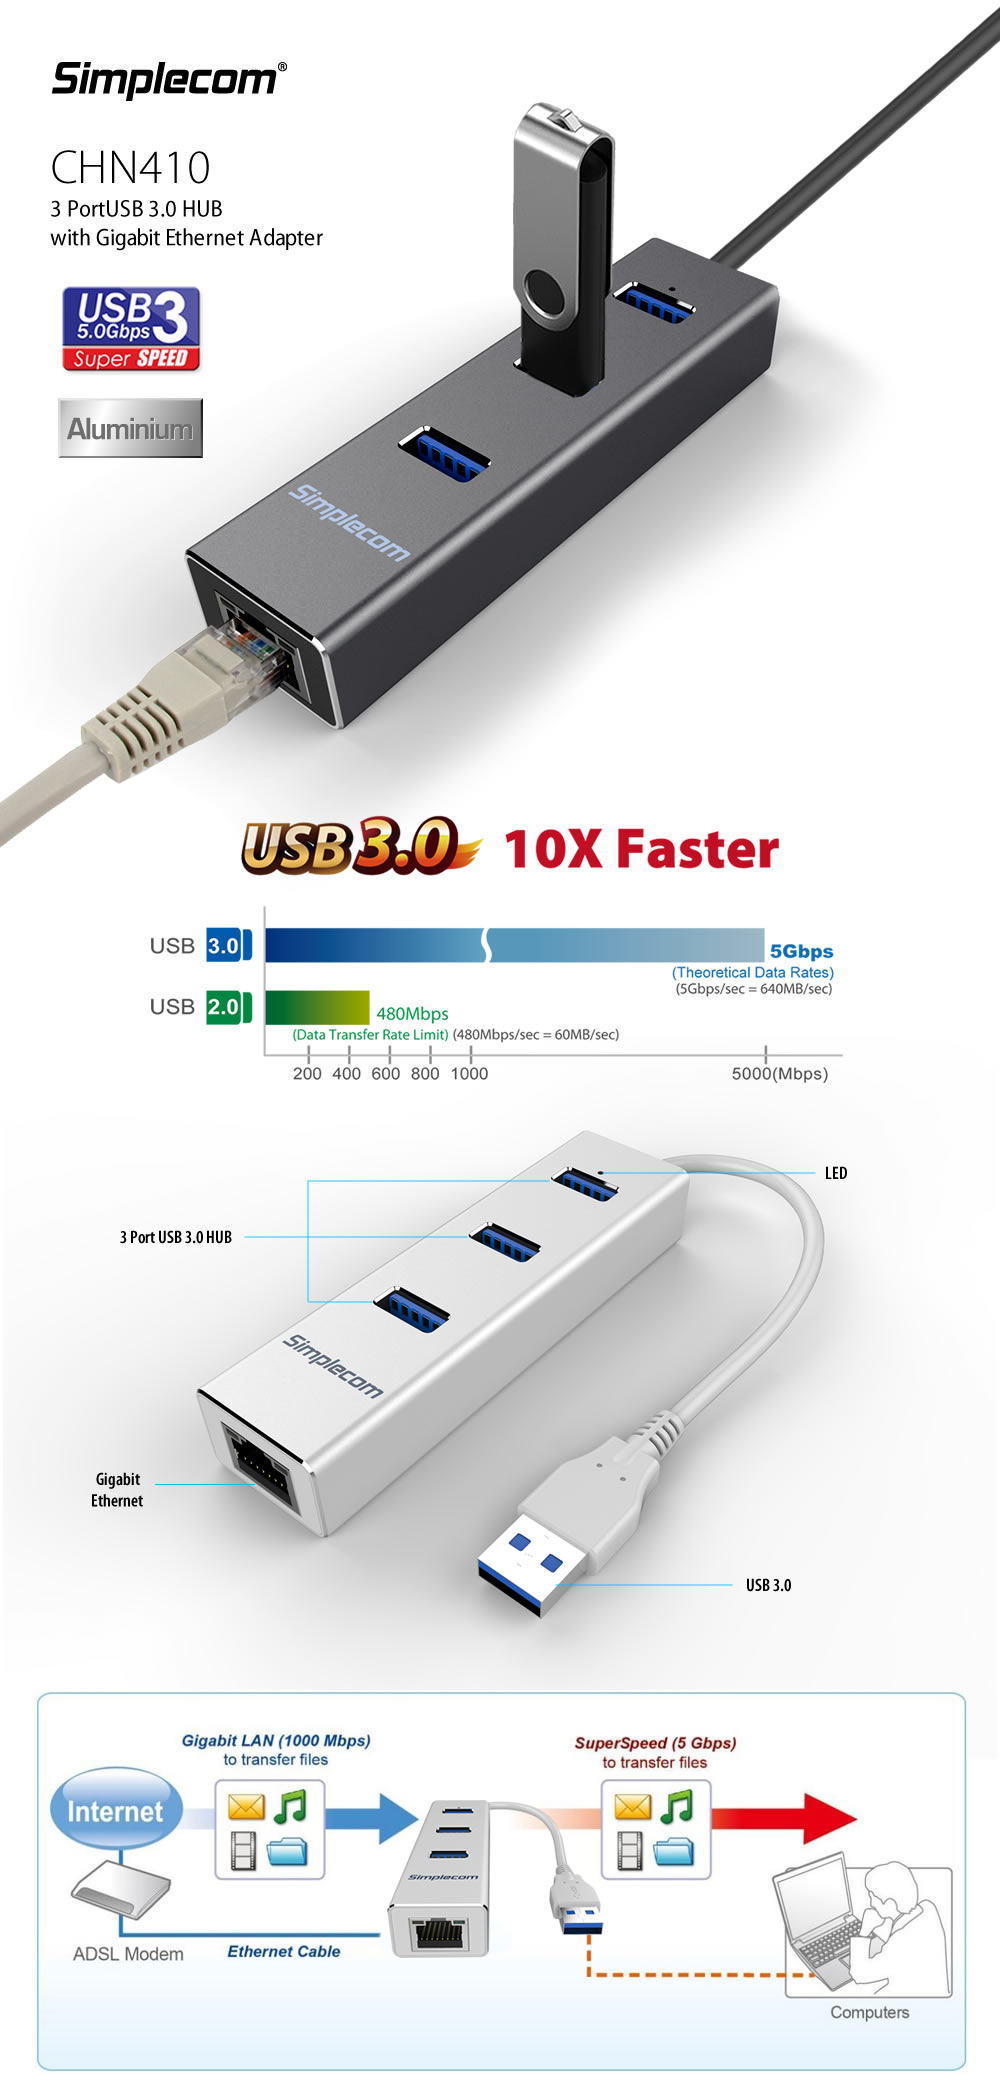 Simplecom CHN410 Aluminium 3 Port USB 3.0 HUB with Gigabit Ethernet Adapter 1000Mbps Black 1